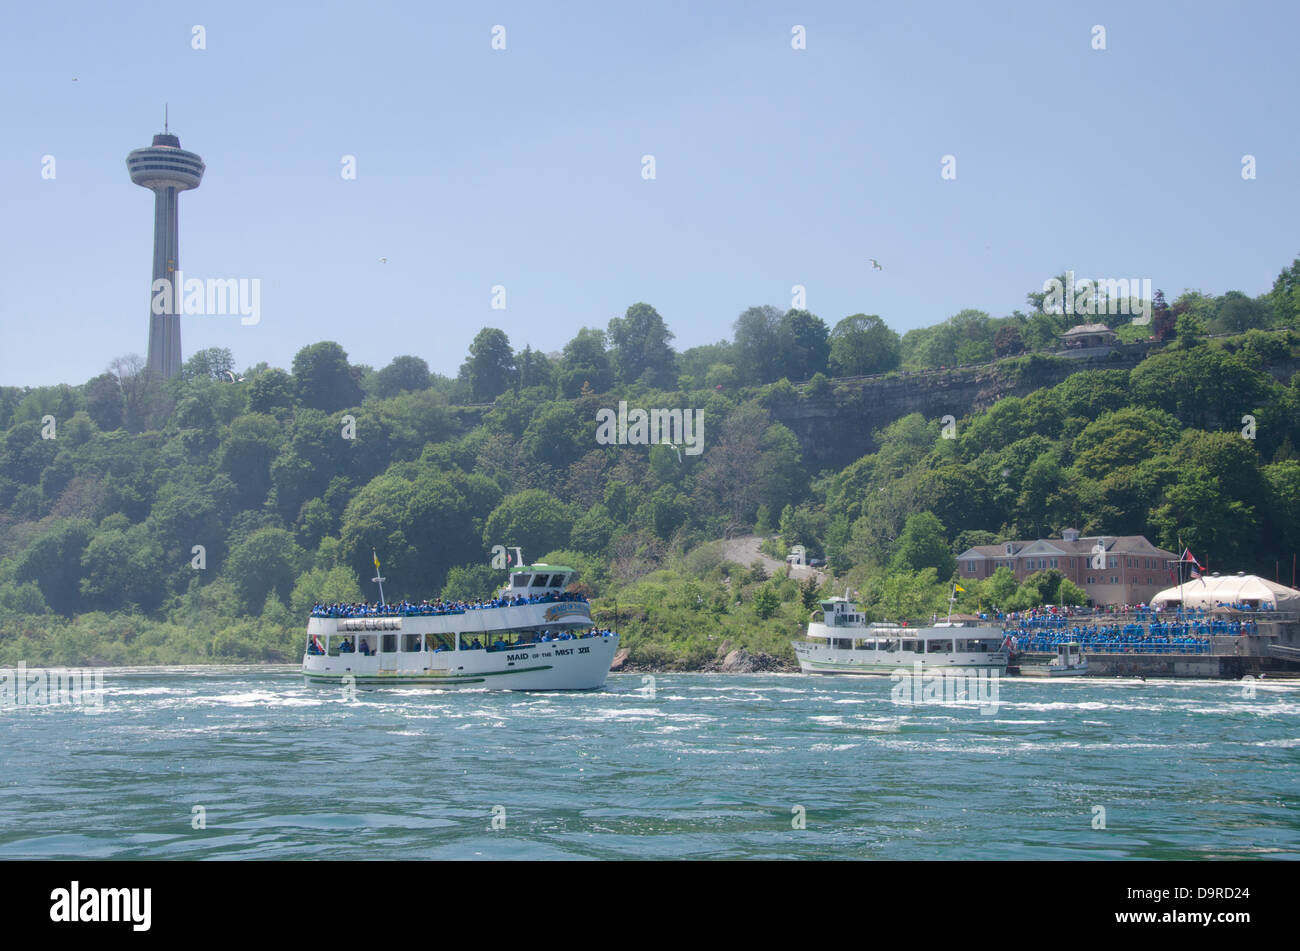 USA / Canada, New York / Ontario, Niagara. Niagara Falls, Maid of the Mist tourist boat. Stock Photo